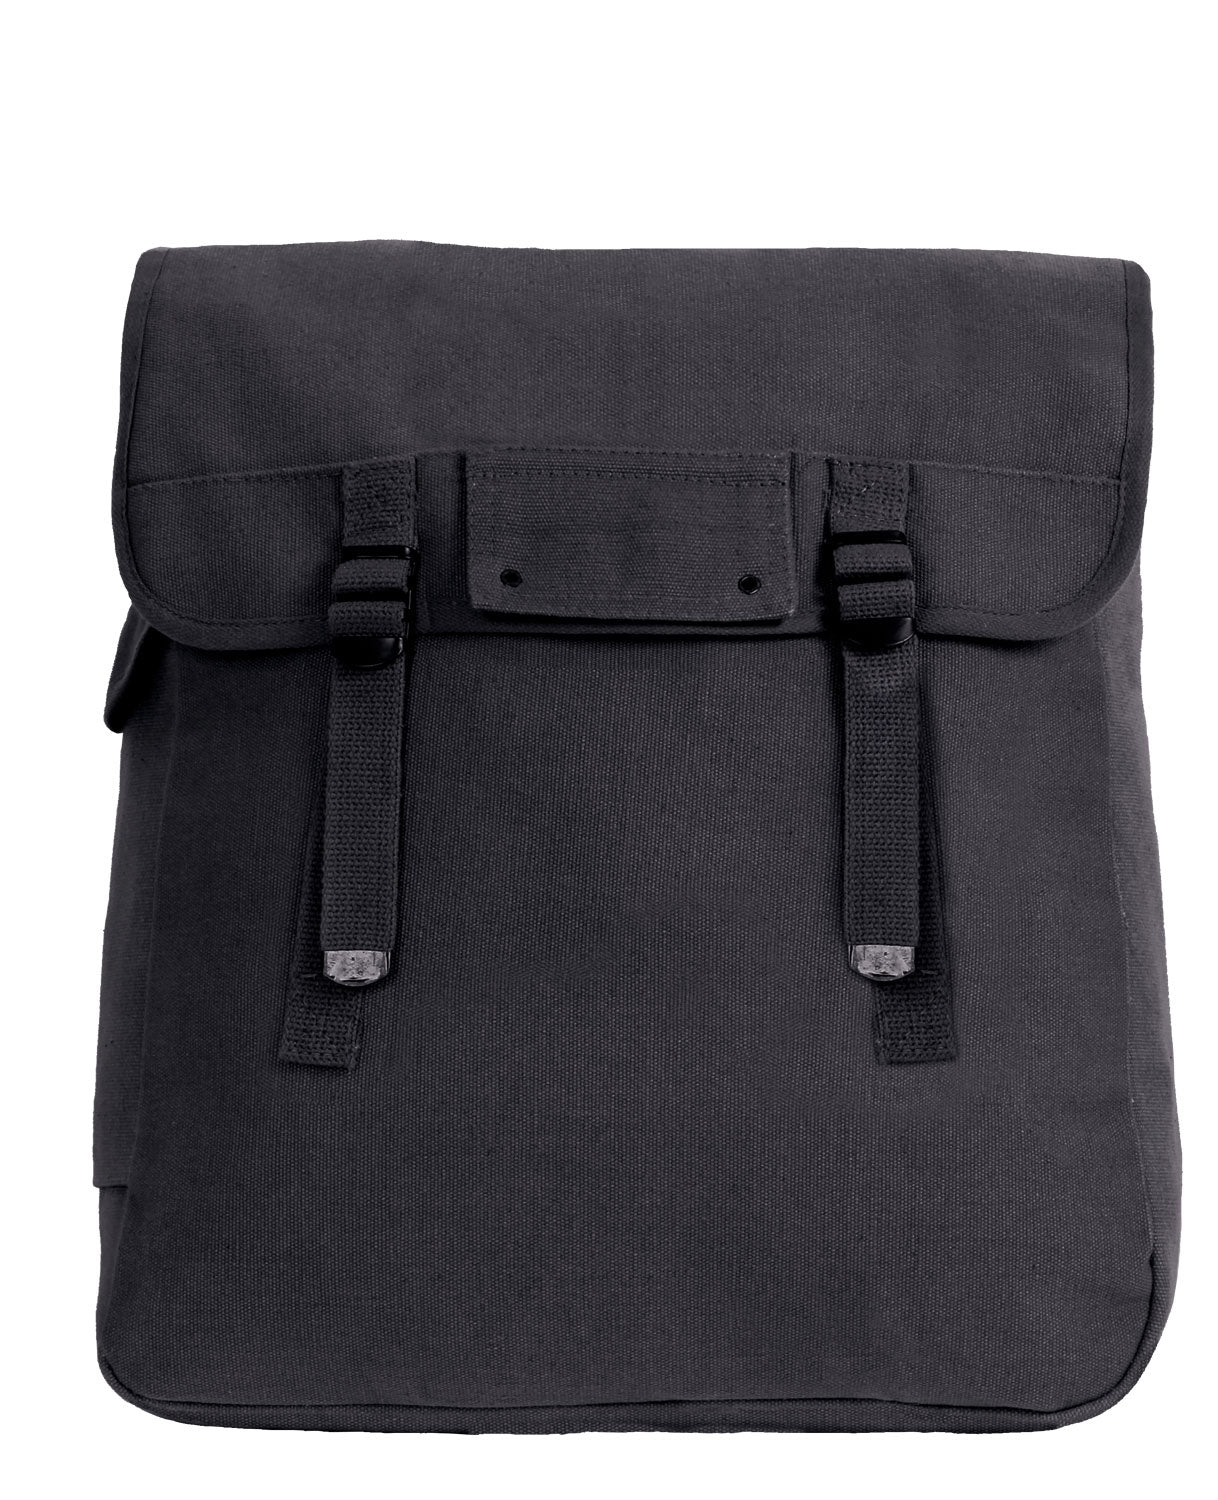 Milspec Canvas Jumbo Musette Bag Military Tool Bags MilTac Tactical Military Outdoor Gear Australia